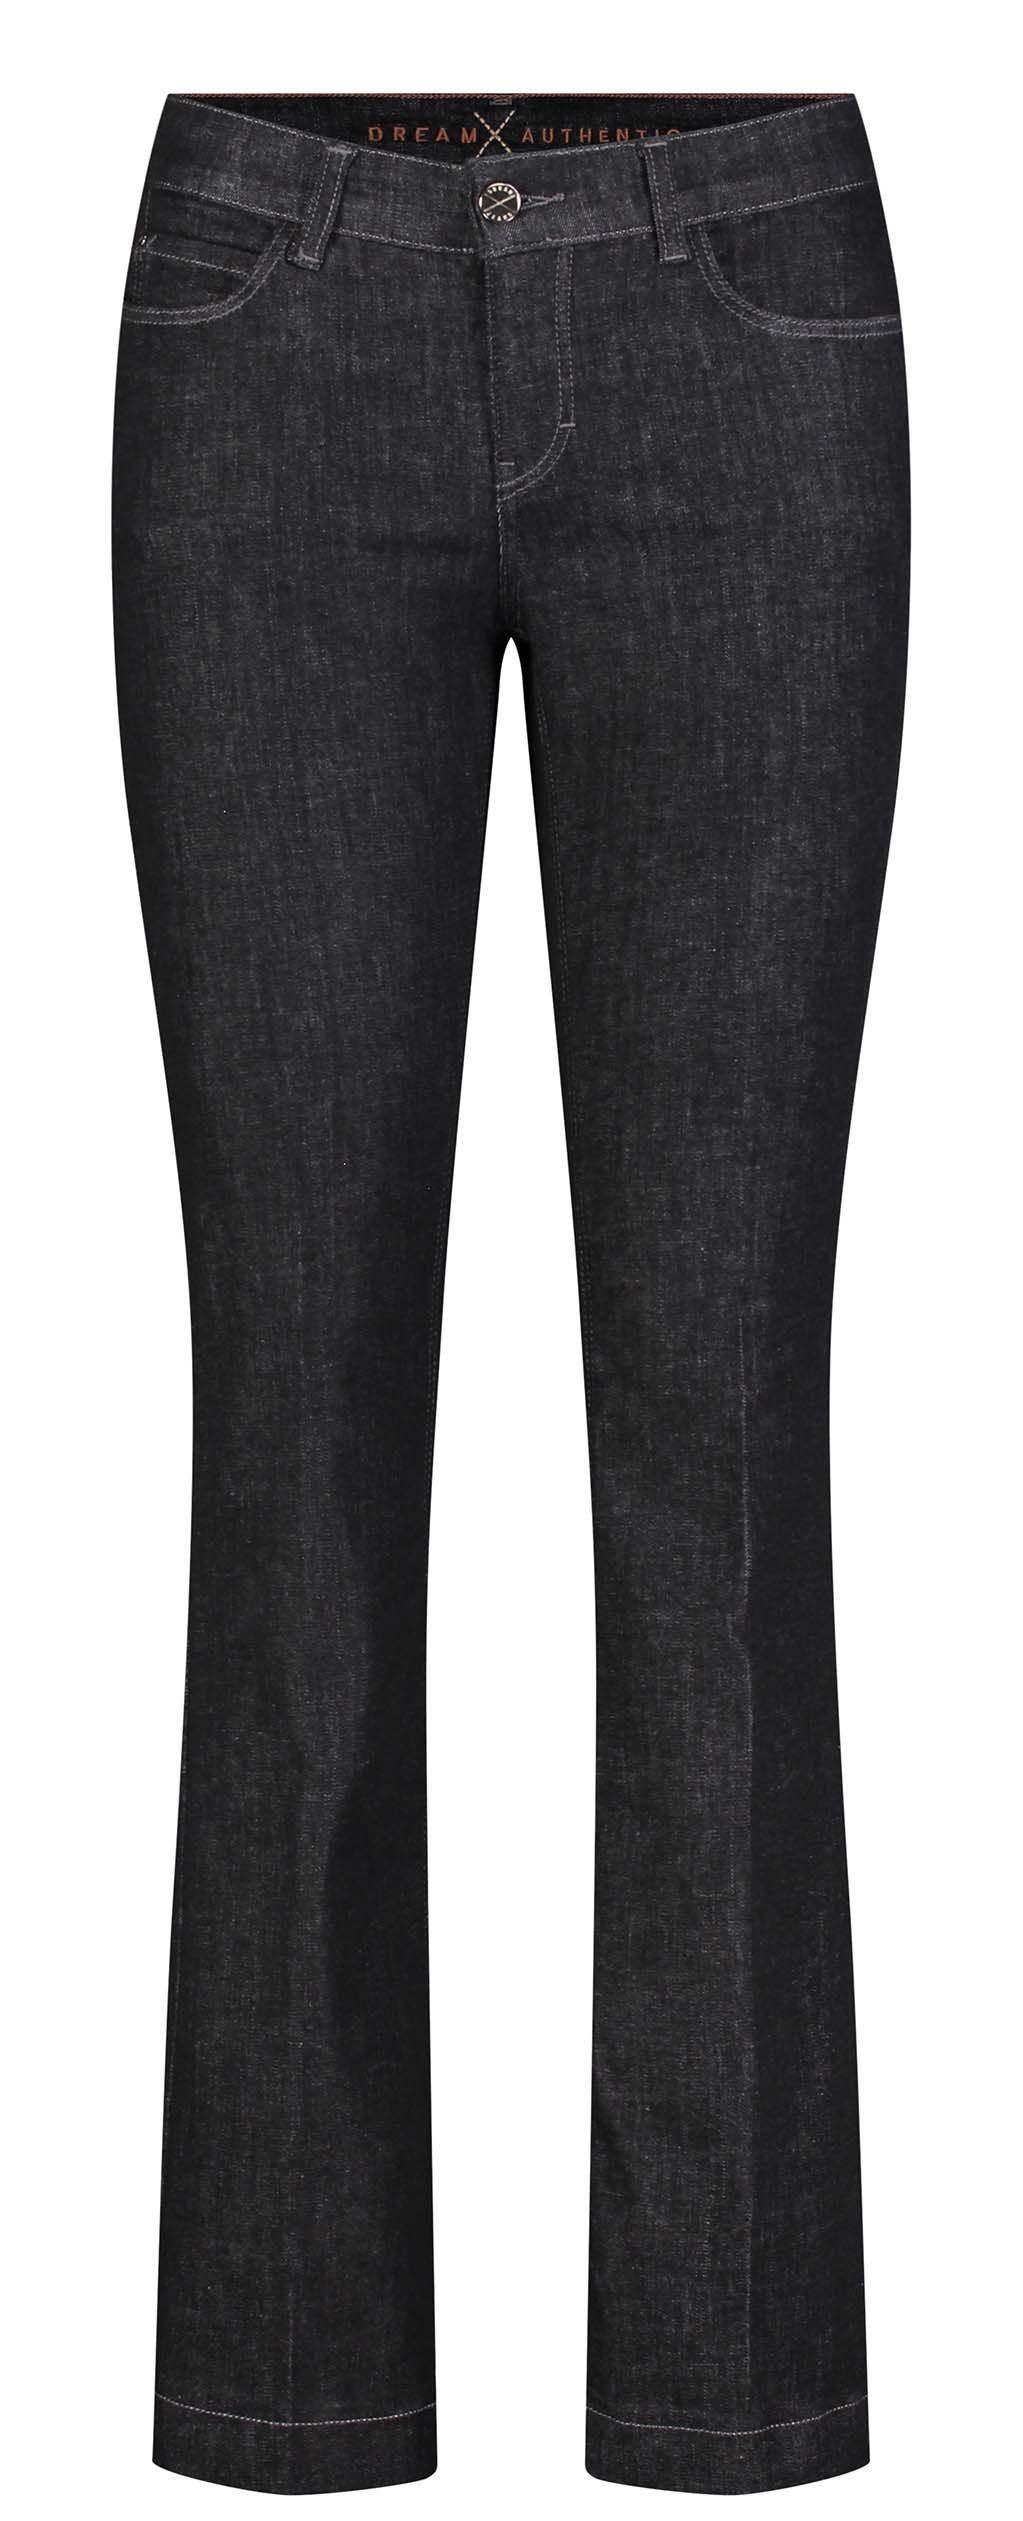 D944 DREAM MAC Stretch-Jeans rinsed black MAC BOOT 5429-90-0357 fashion